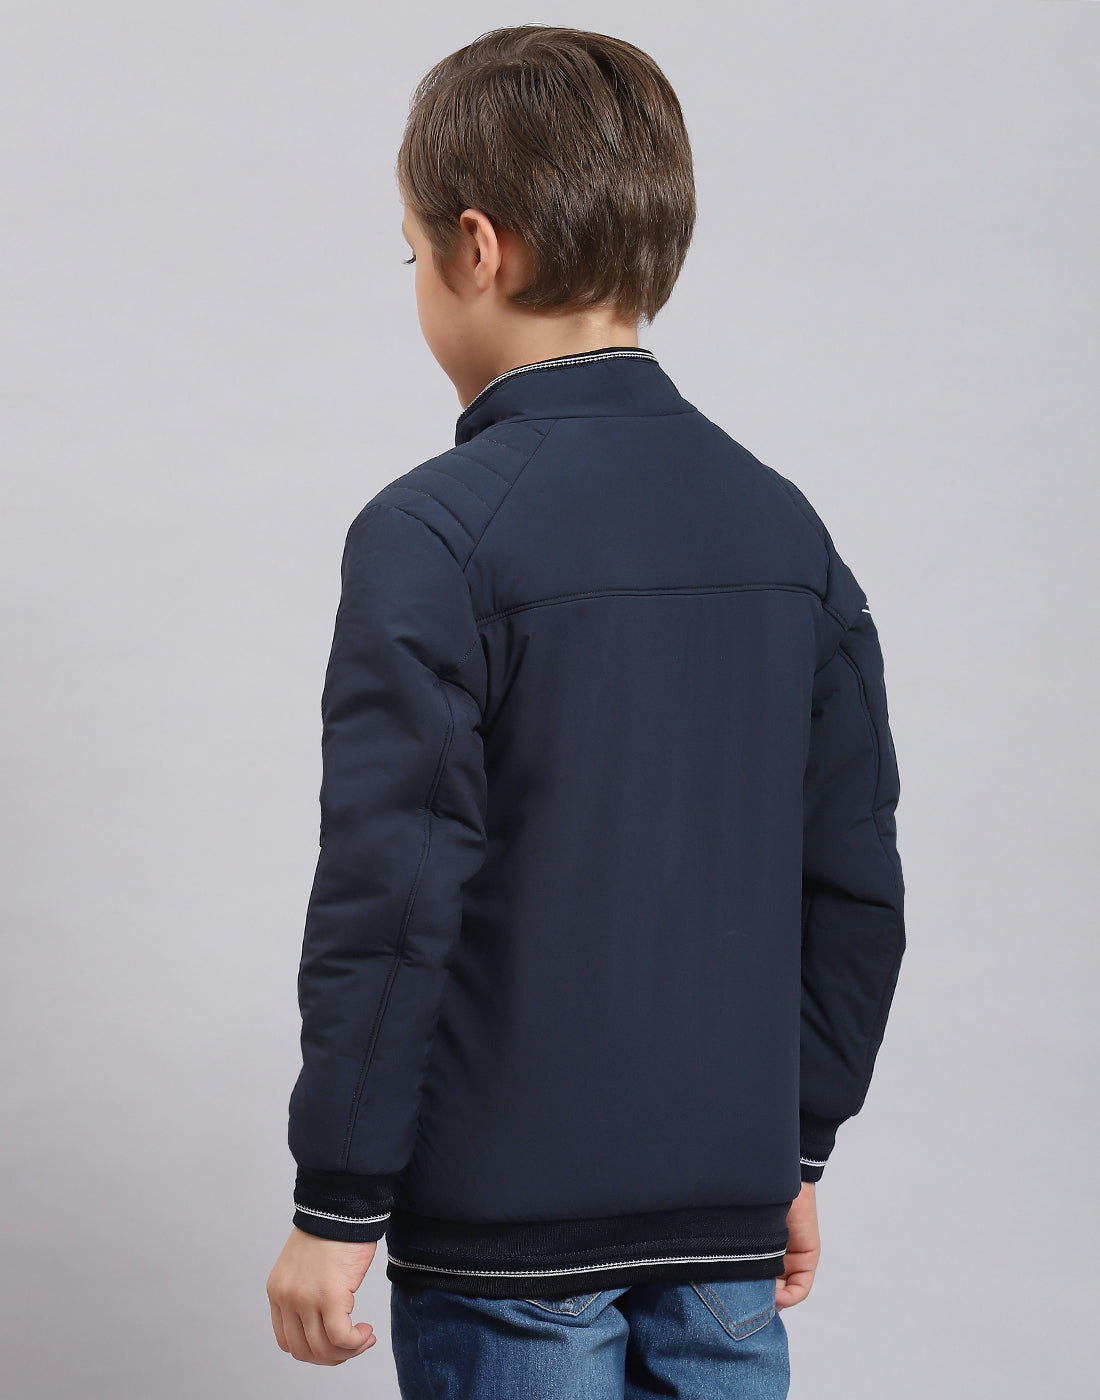 Boys Navy Blue Solid Stand Collar Full Sleeve Boys Jacket